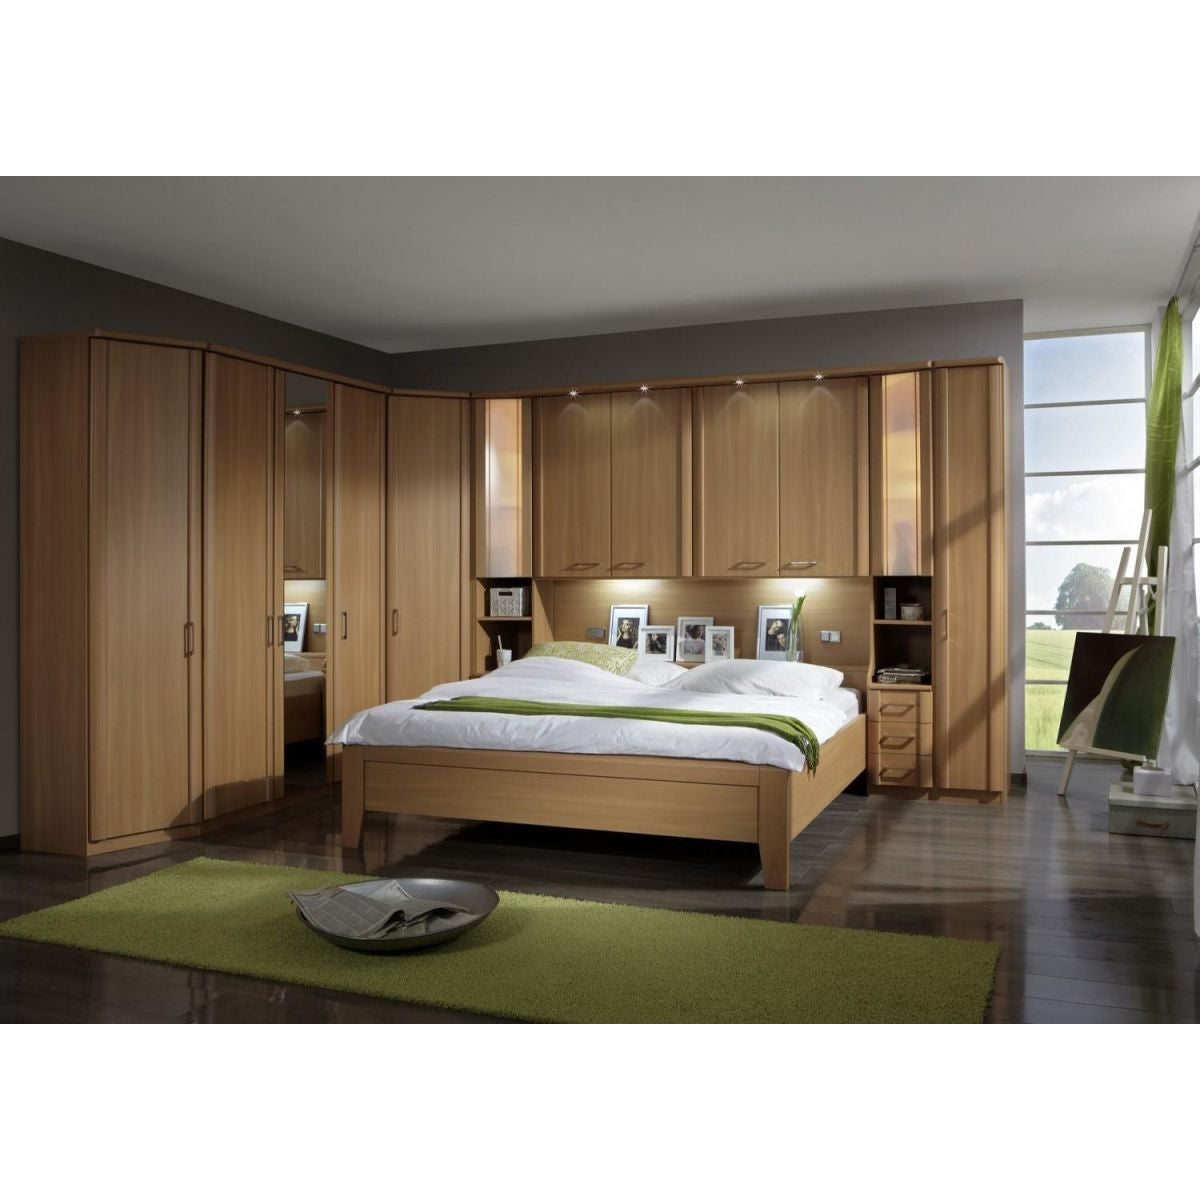 Luxor Comfort Bed Space saving Design